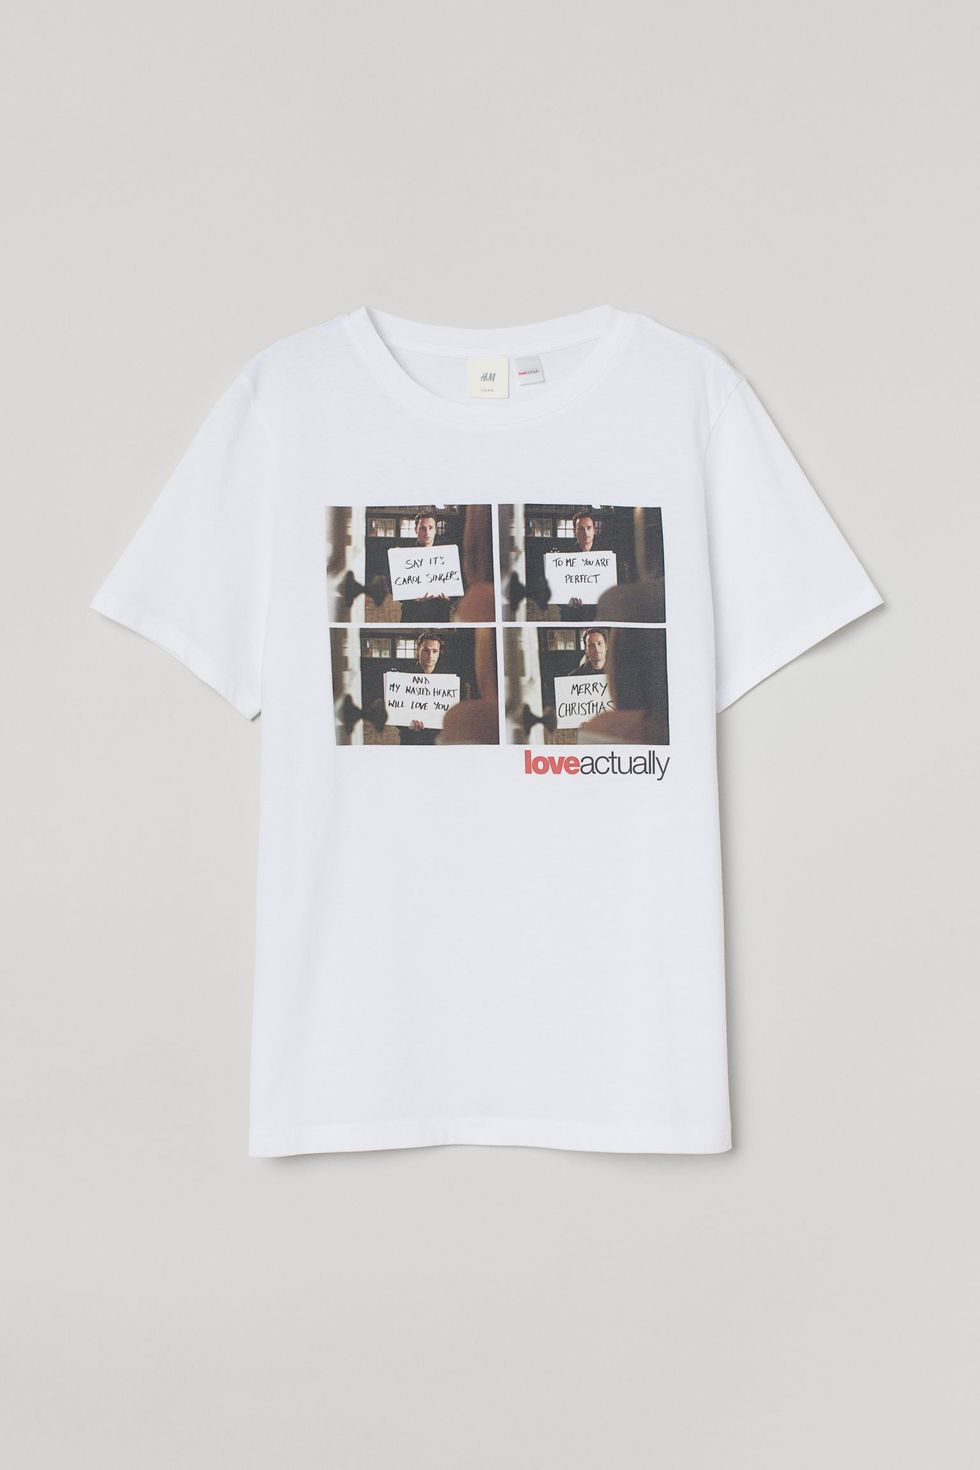 La camiseta con la escena de Love Actually aterriza H&M